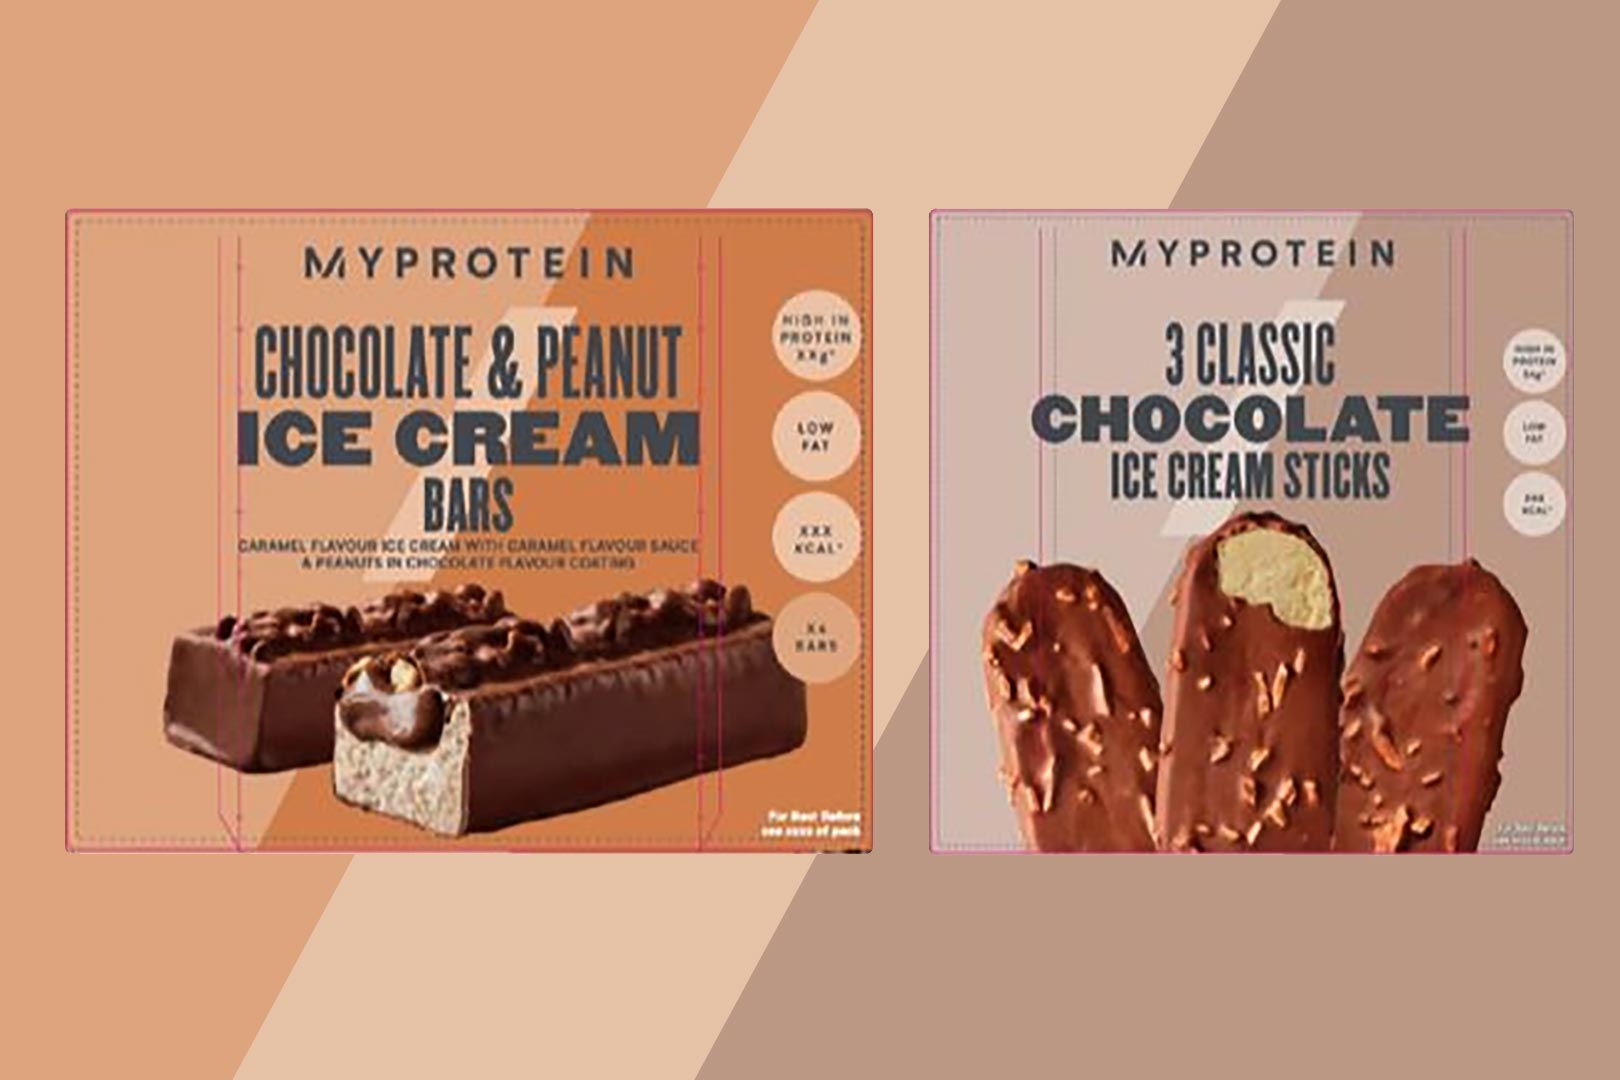 Myprotein Ice Cream Sticks And Bars